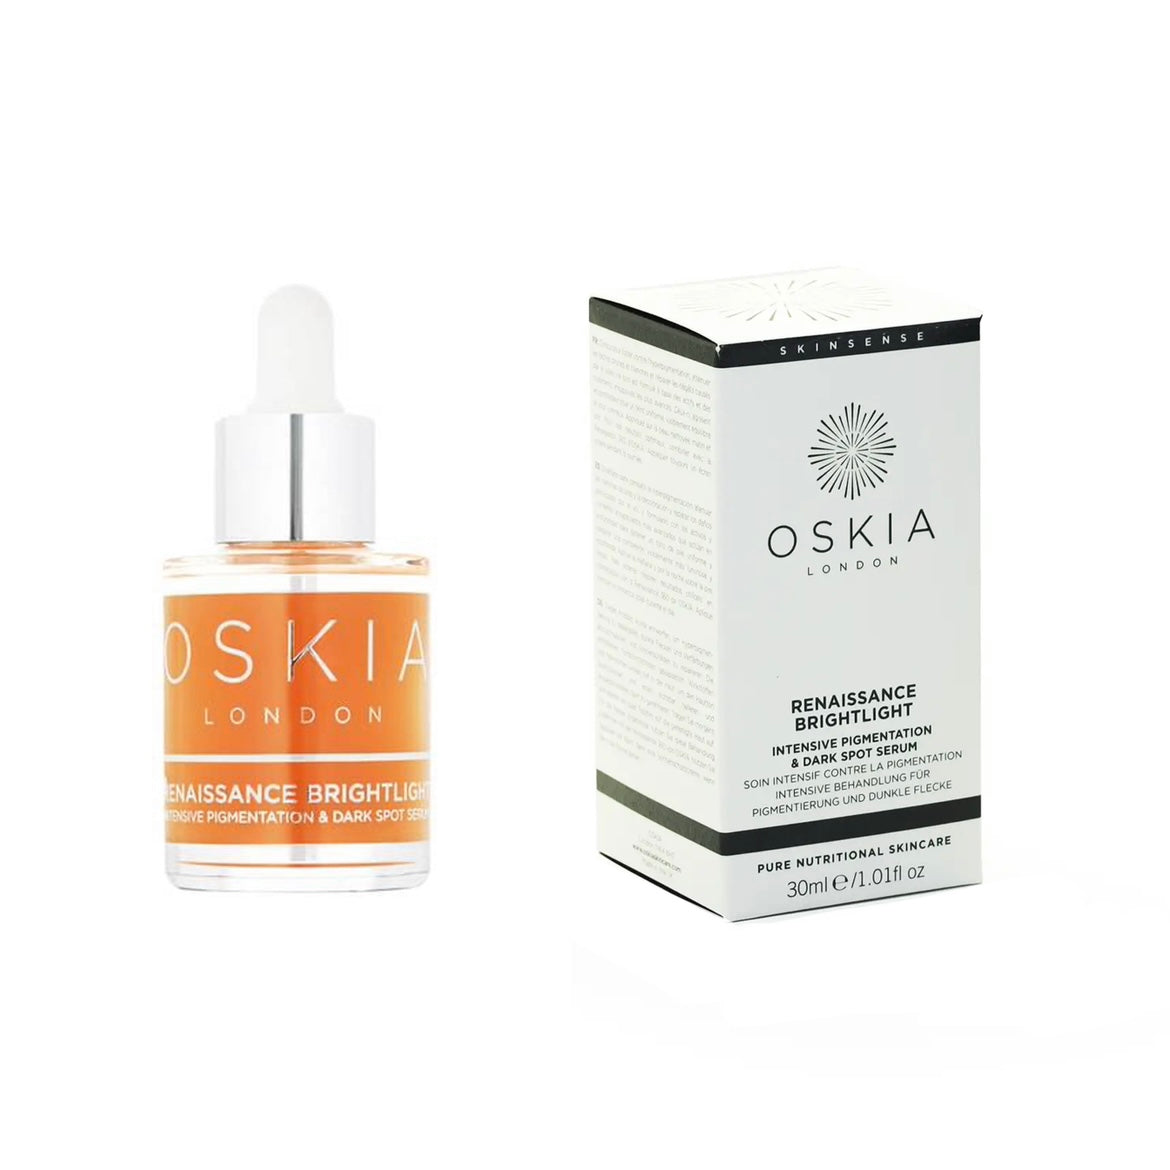 (正版現貨) OSKIA London renaissance bright light hyper-pigmentation & dark spot serum 30ml